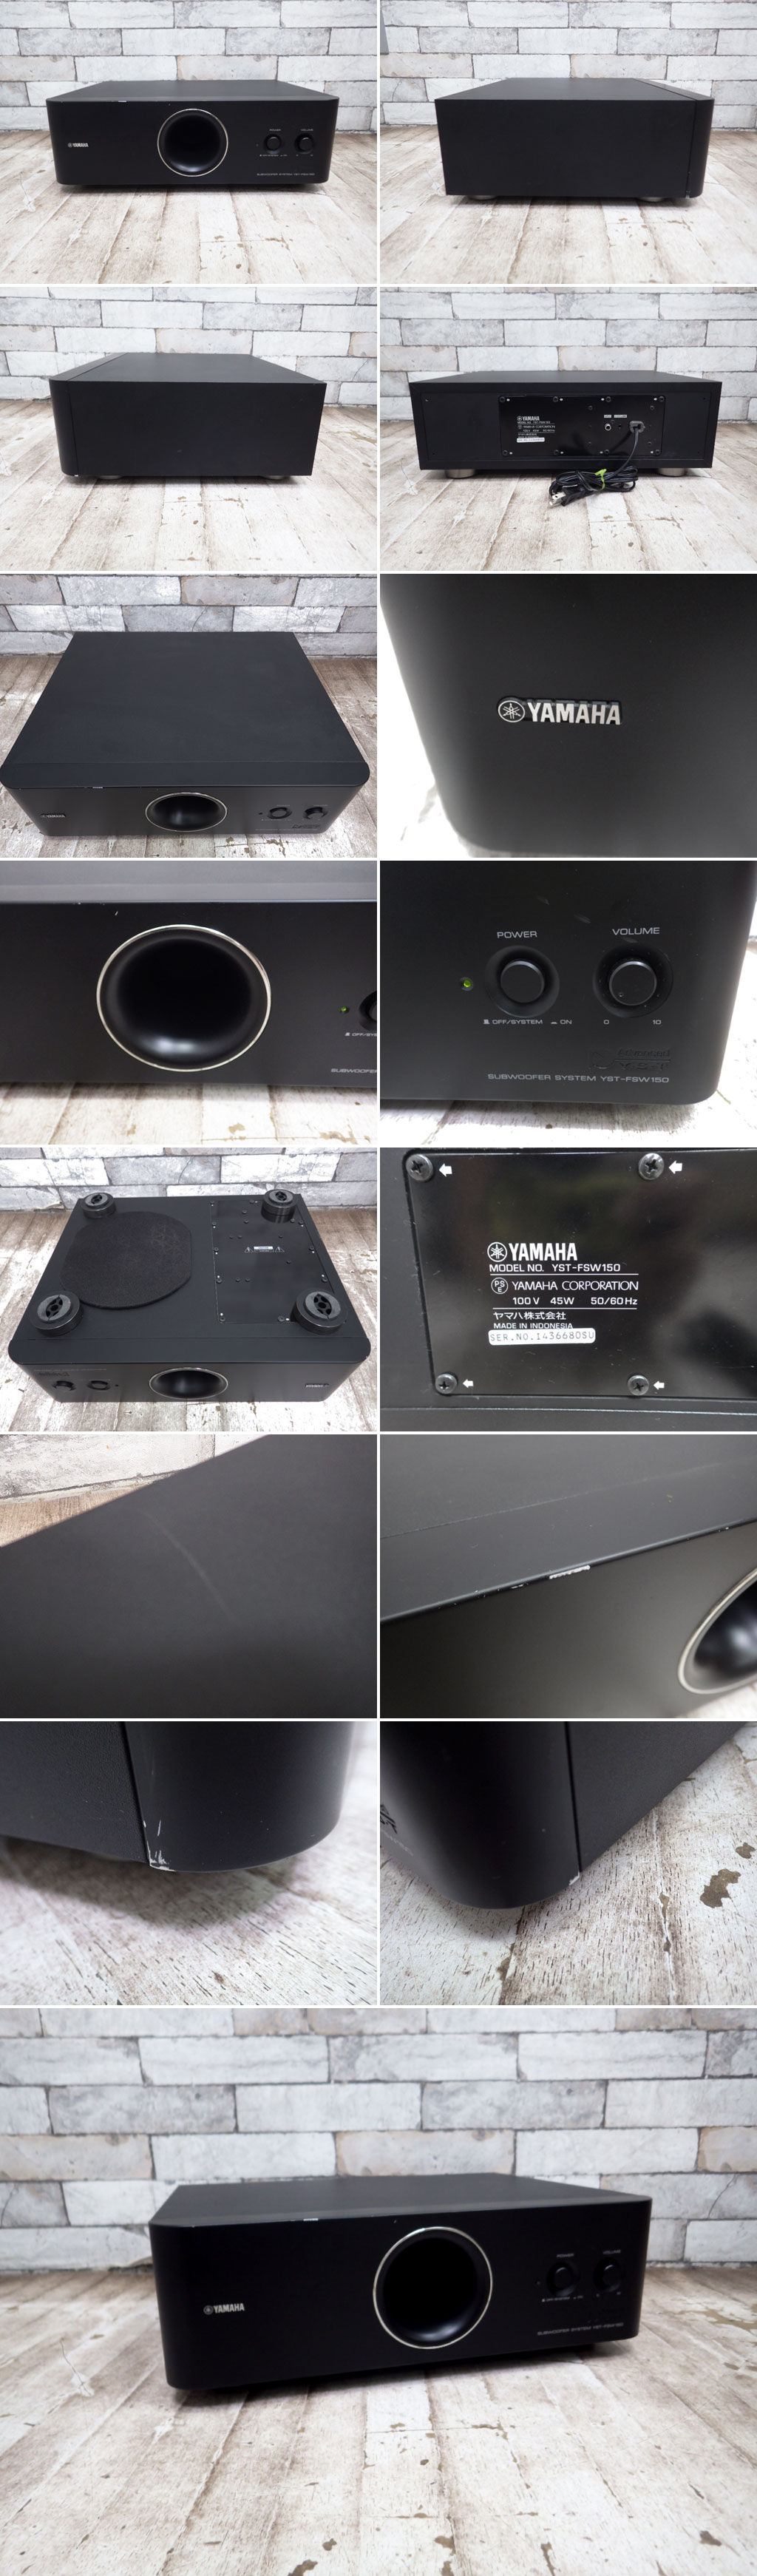 Yamaha YAMAHA subwoofer black YST-FSW150(B) speaker Junk audio equipment *:  Real Yahoo auction salling